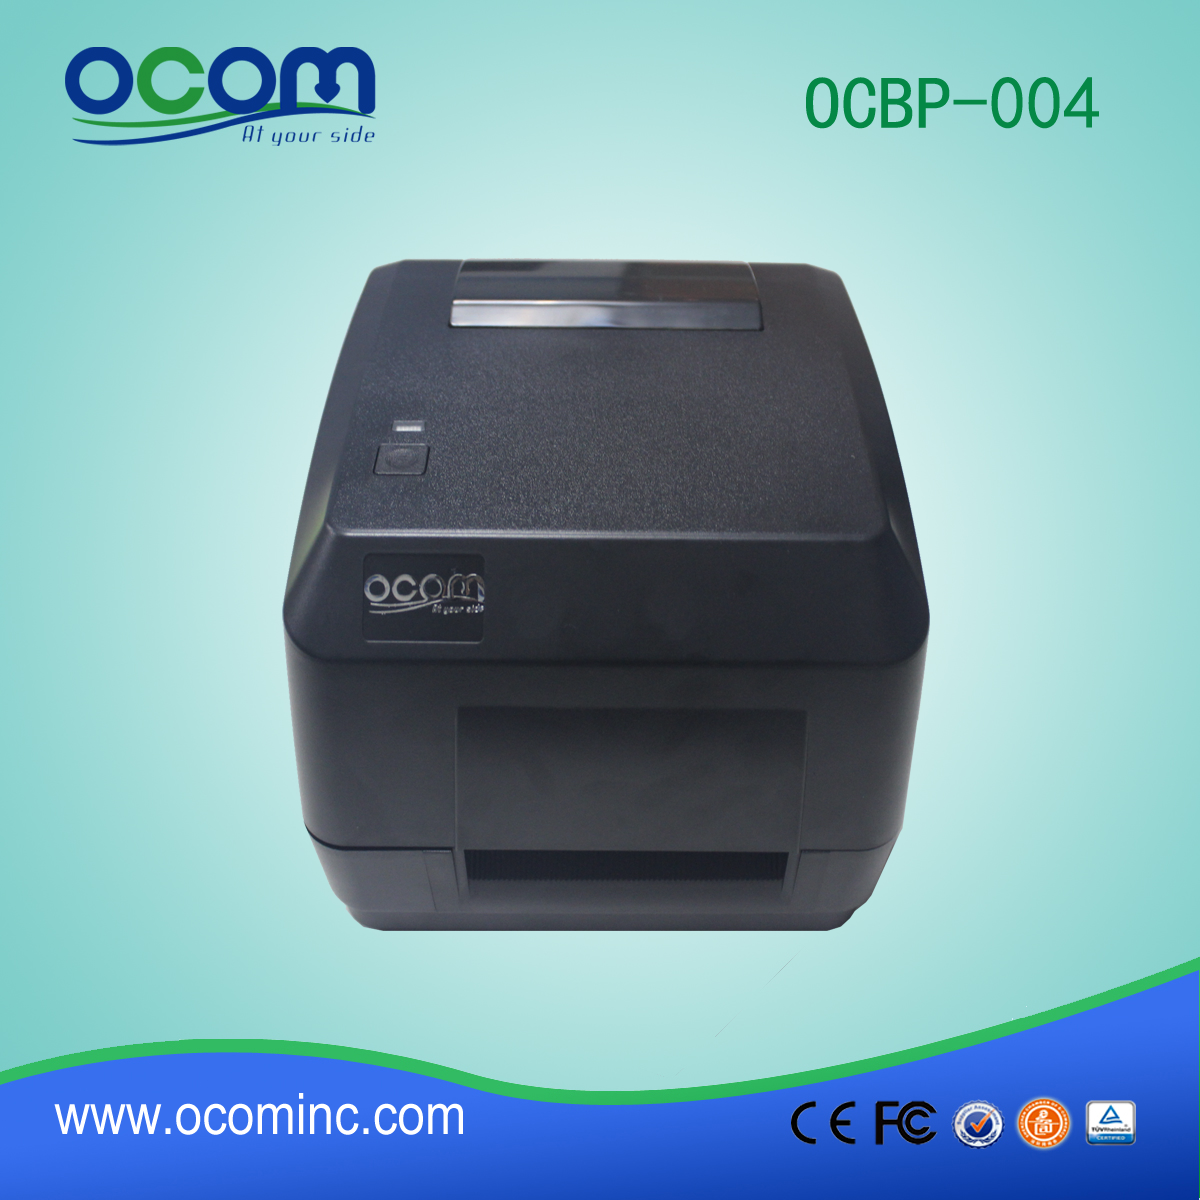 OCBP-004) الصين مصنع جعل نقل الحرارة آلة الطباعة ورقة